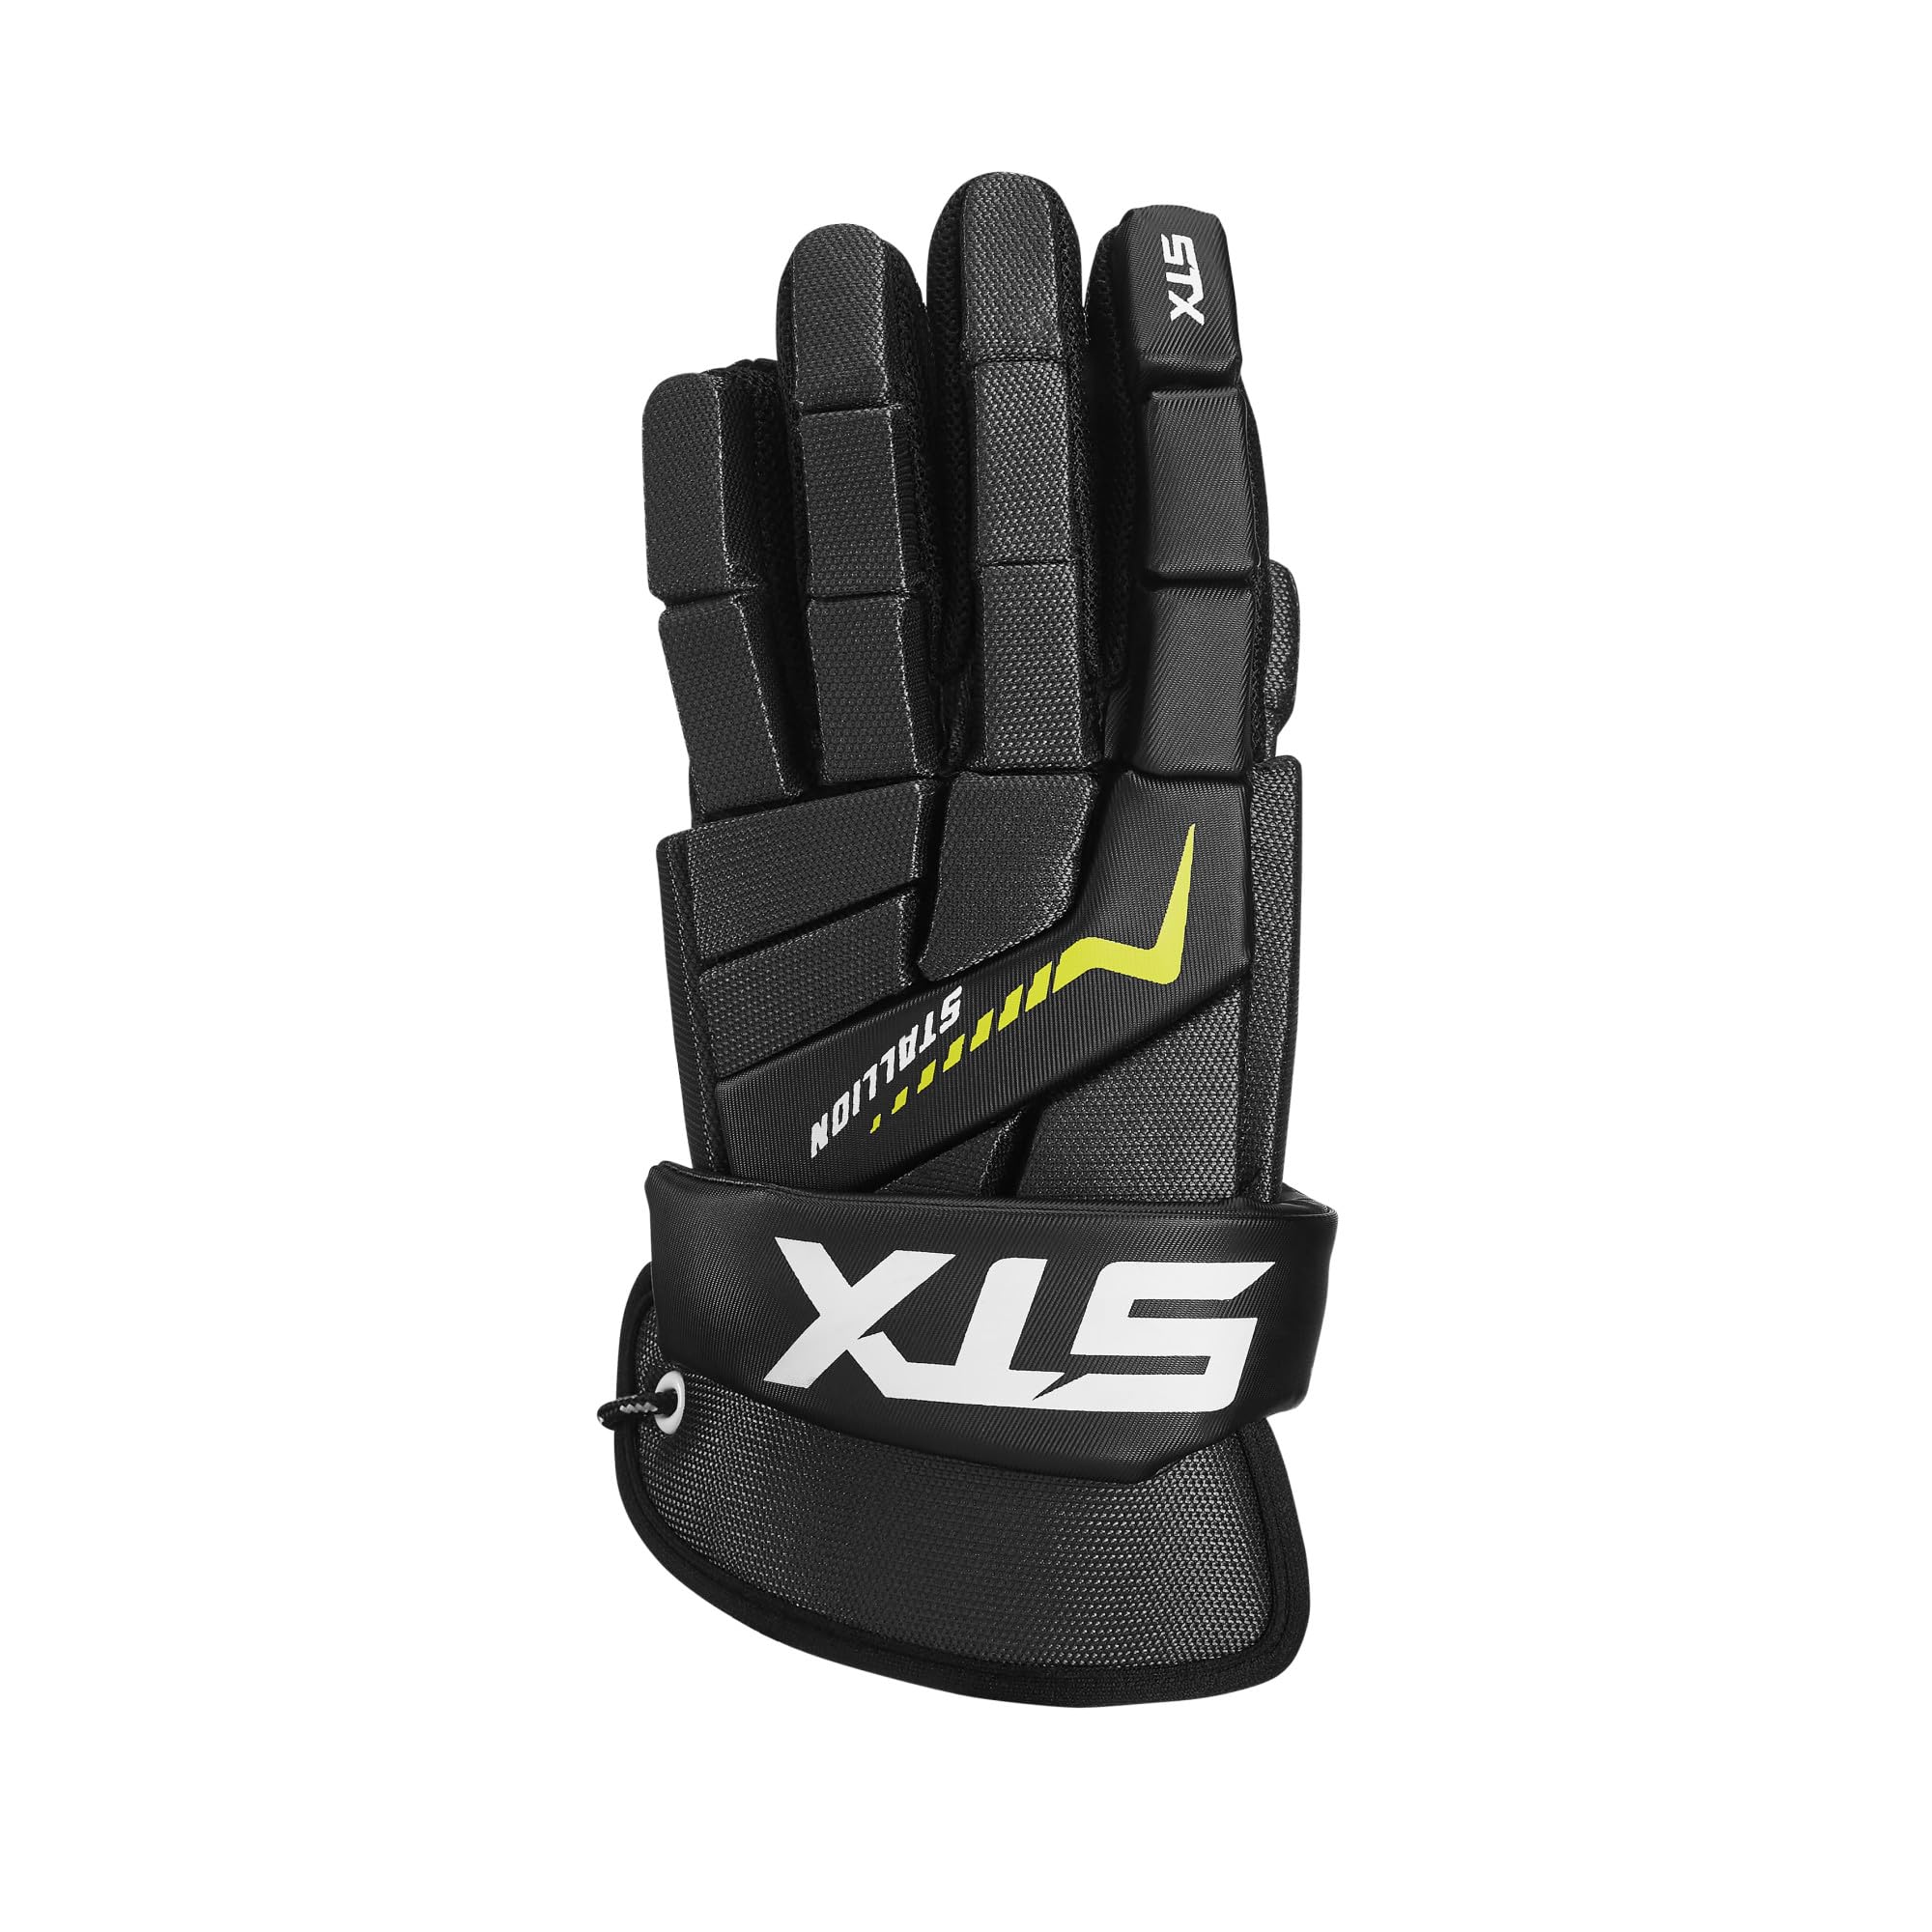 STX Stallion 200 Lacrosse Gloves, Black/Grey, Small